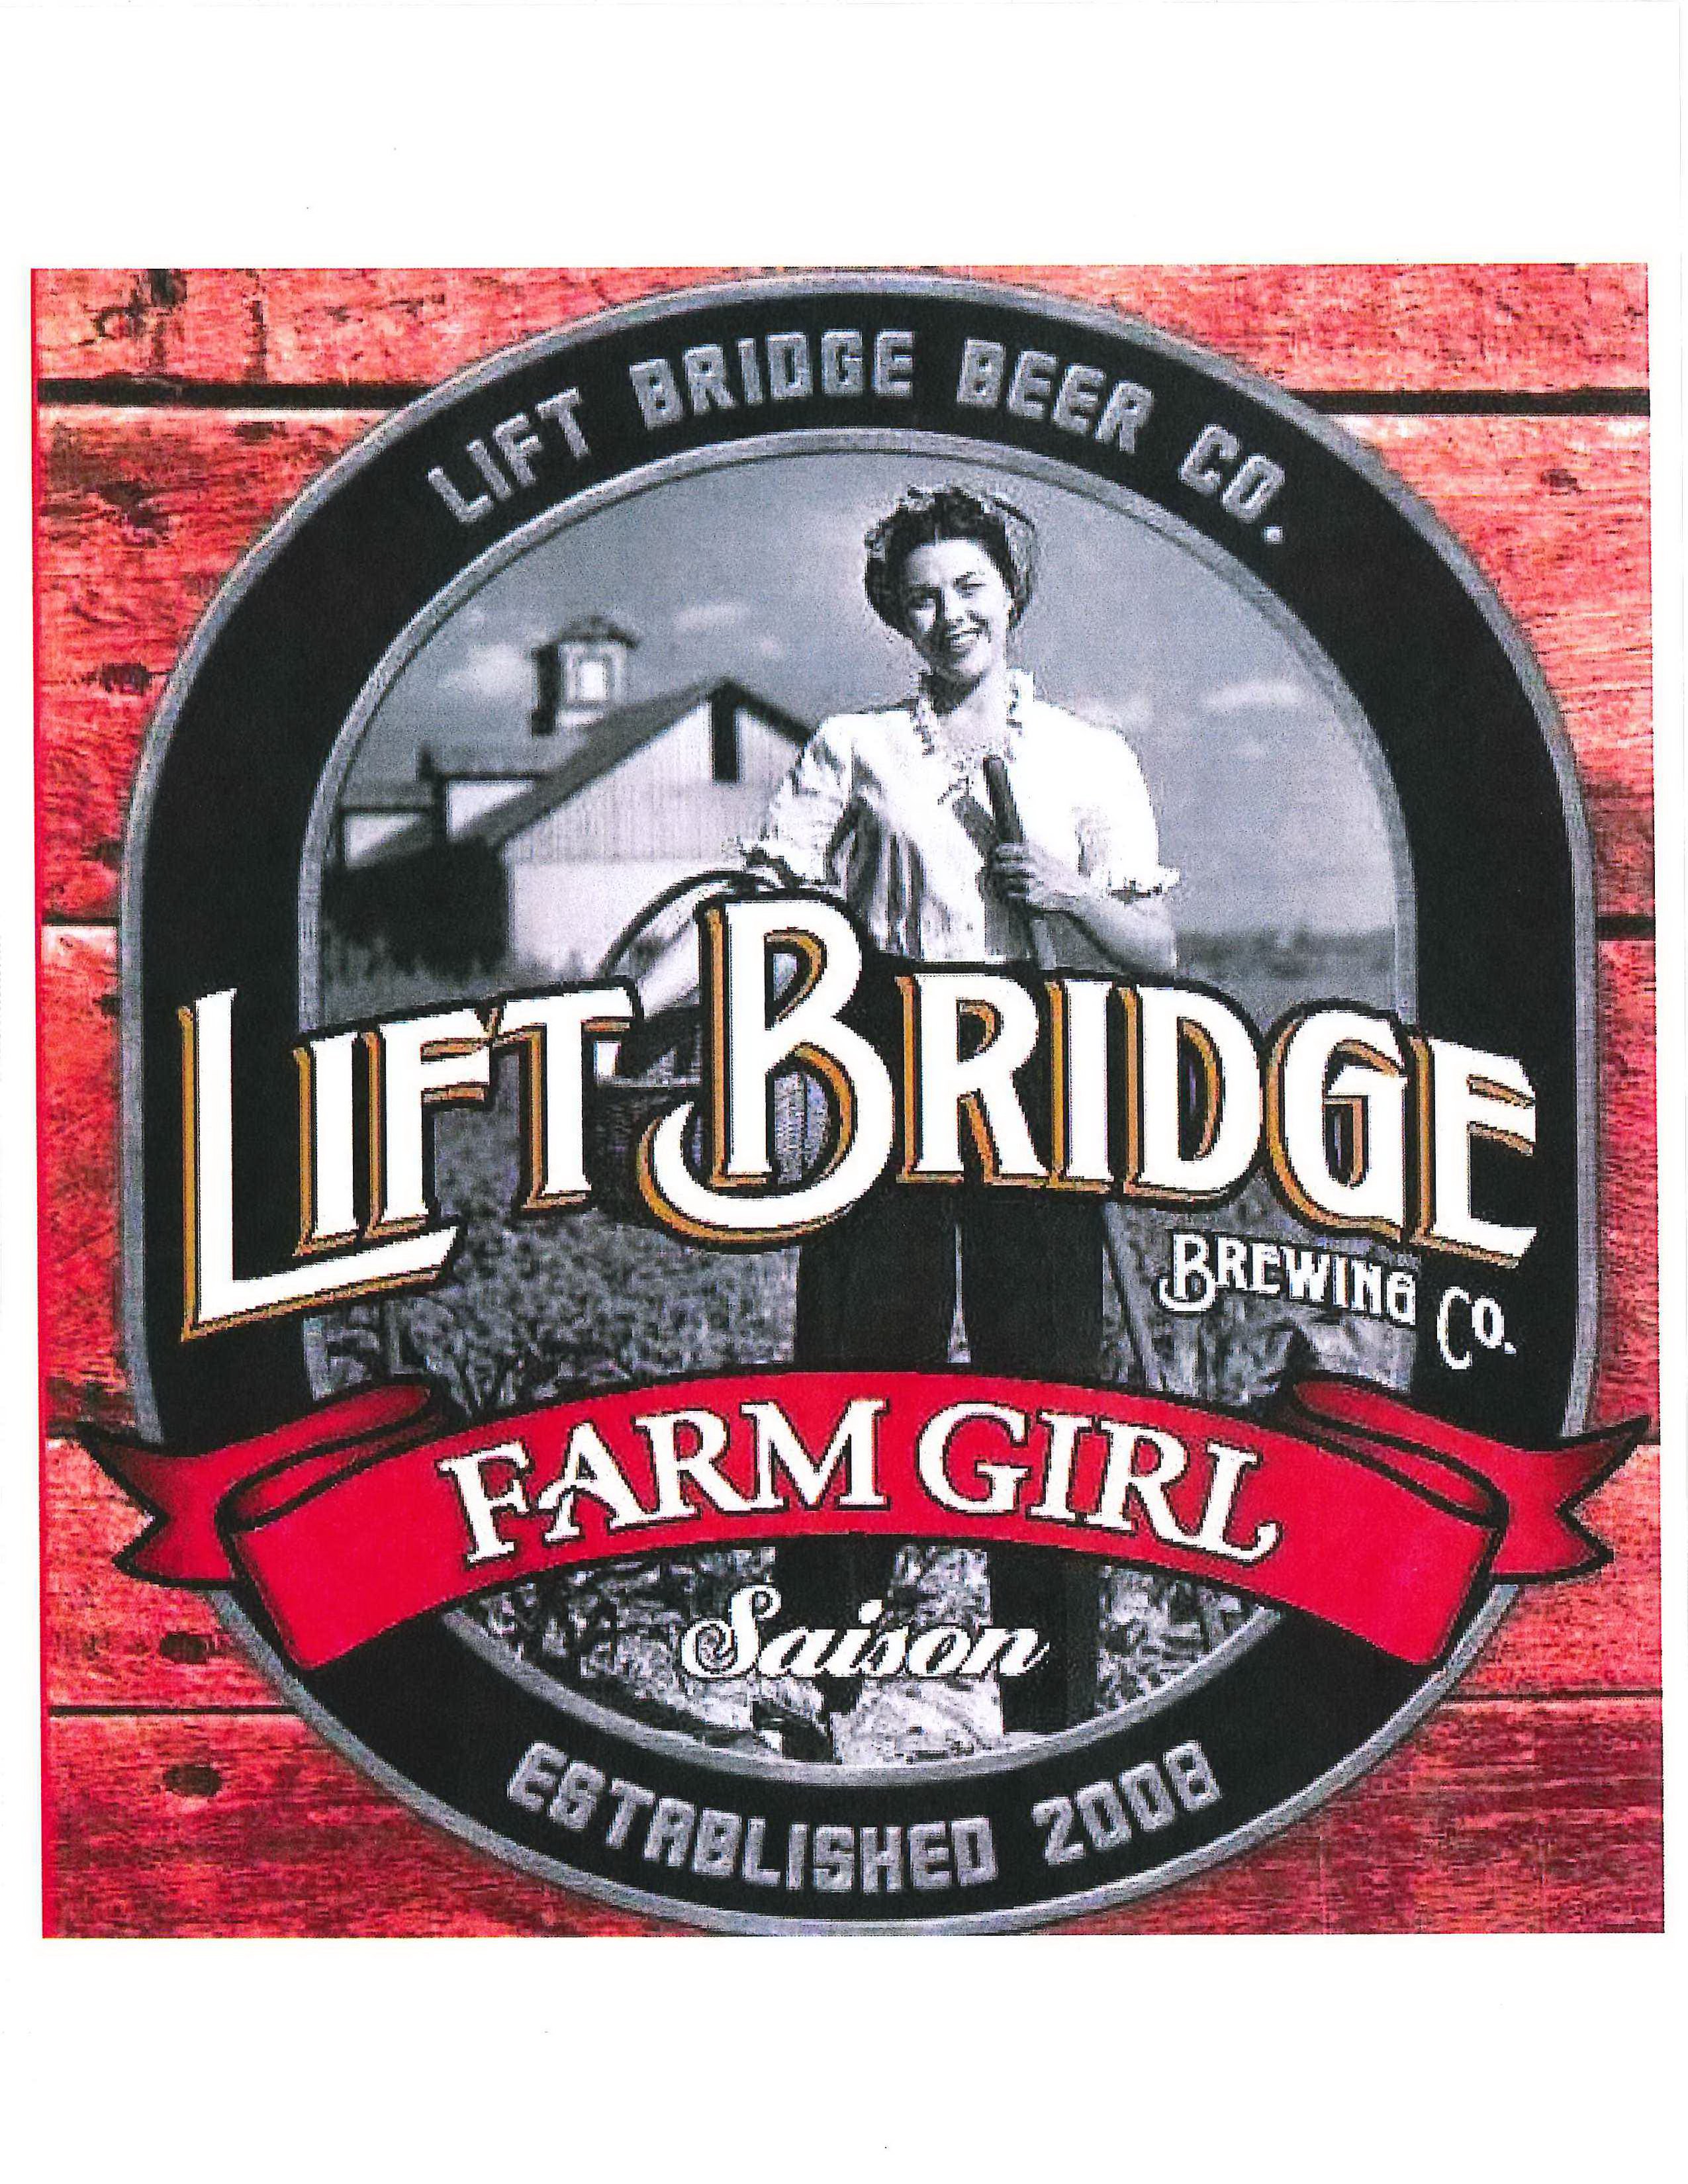  FARM GIRL LIFT BRIDGE BEER CO. LIFT BRIDGE BREWING CO. SAISON ESTABLISHED 2008